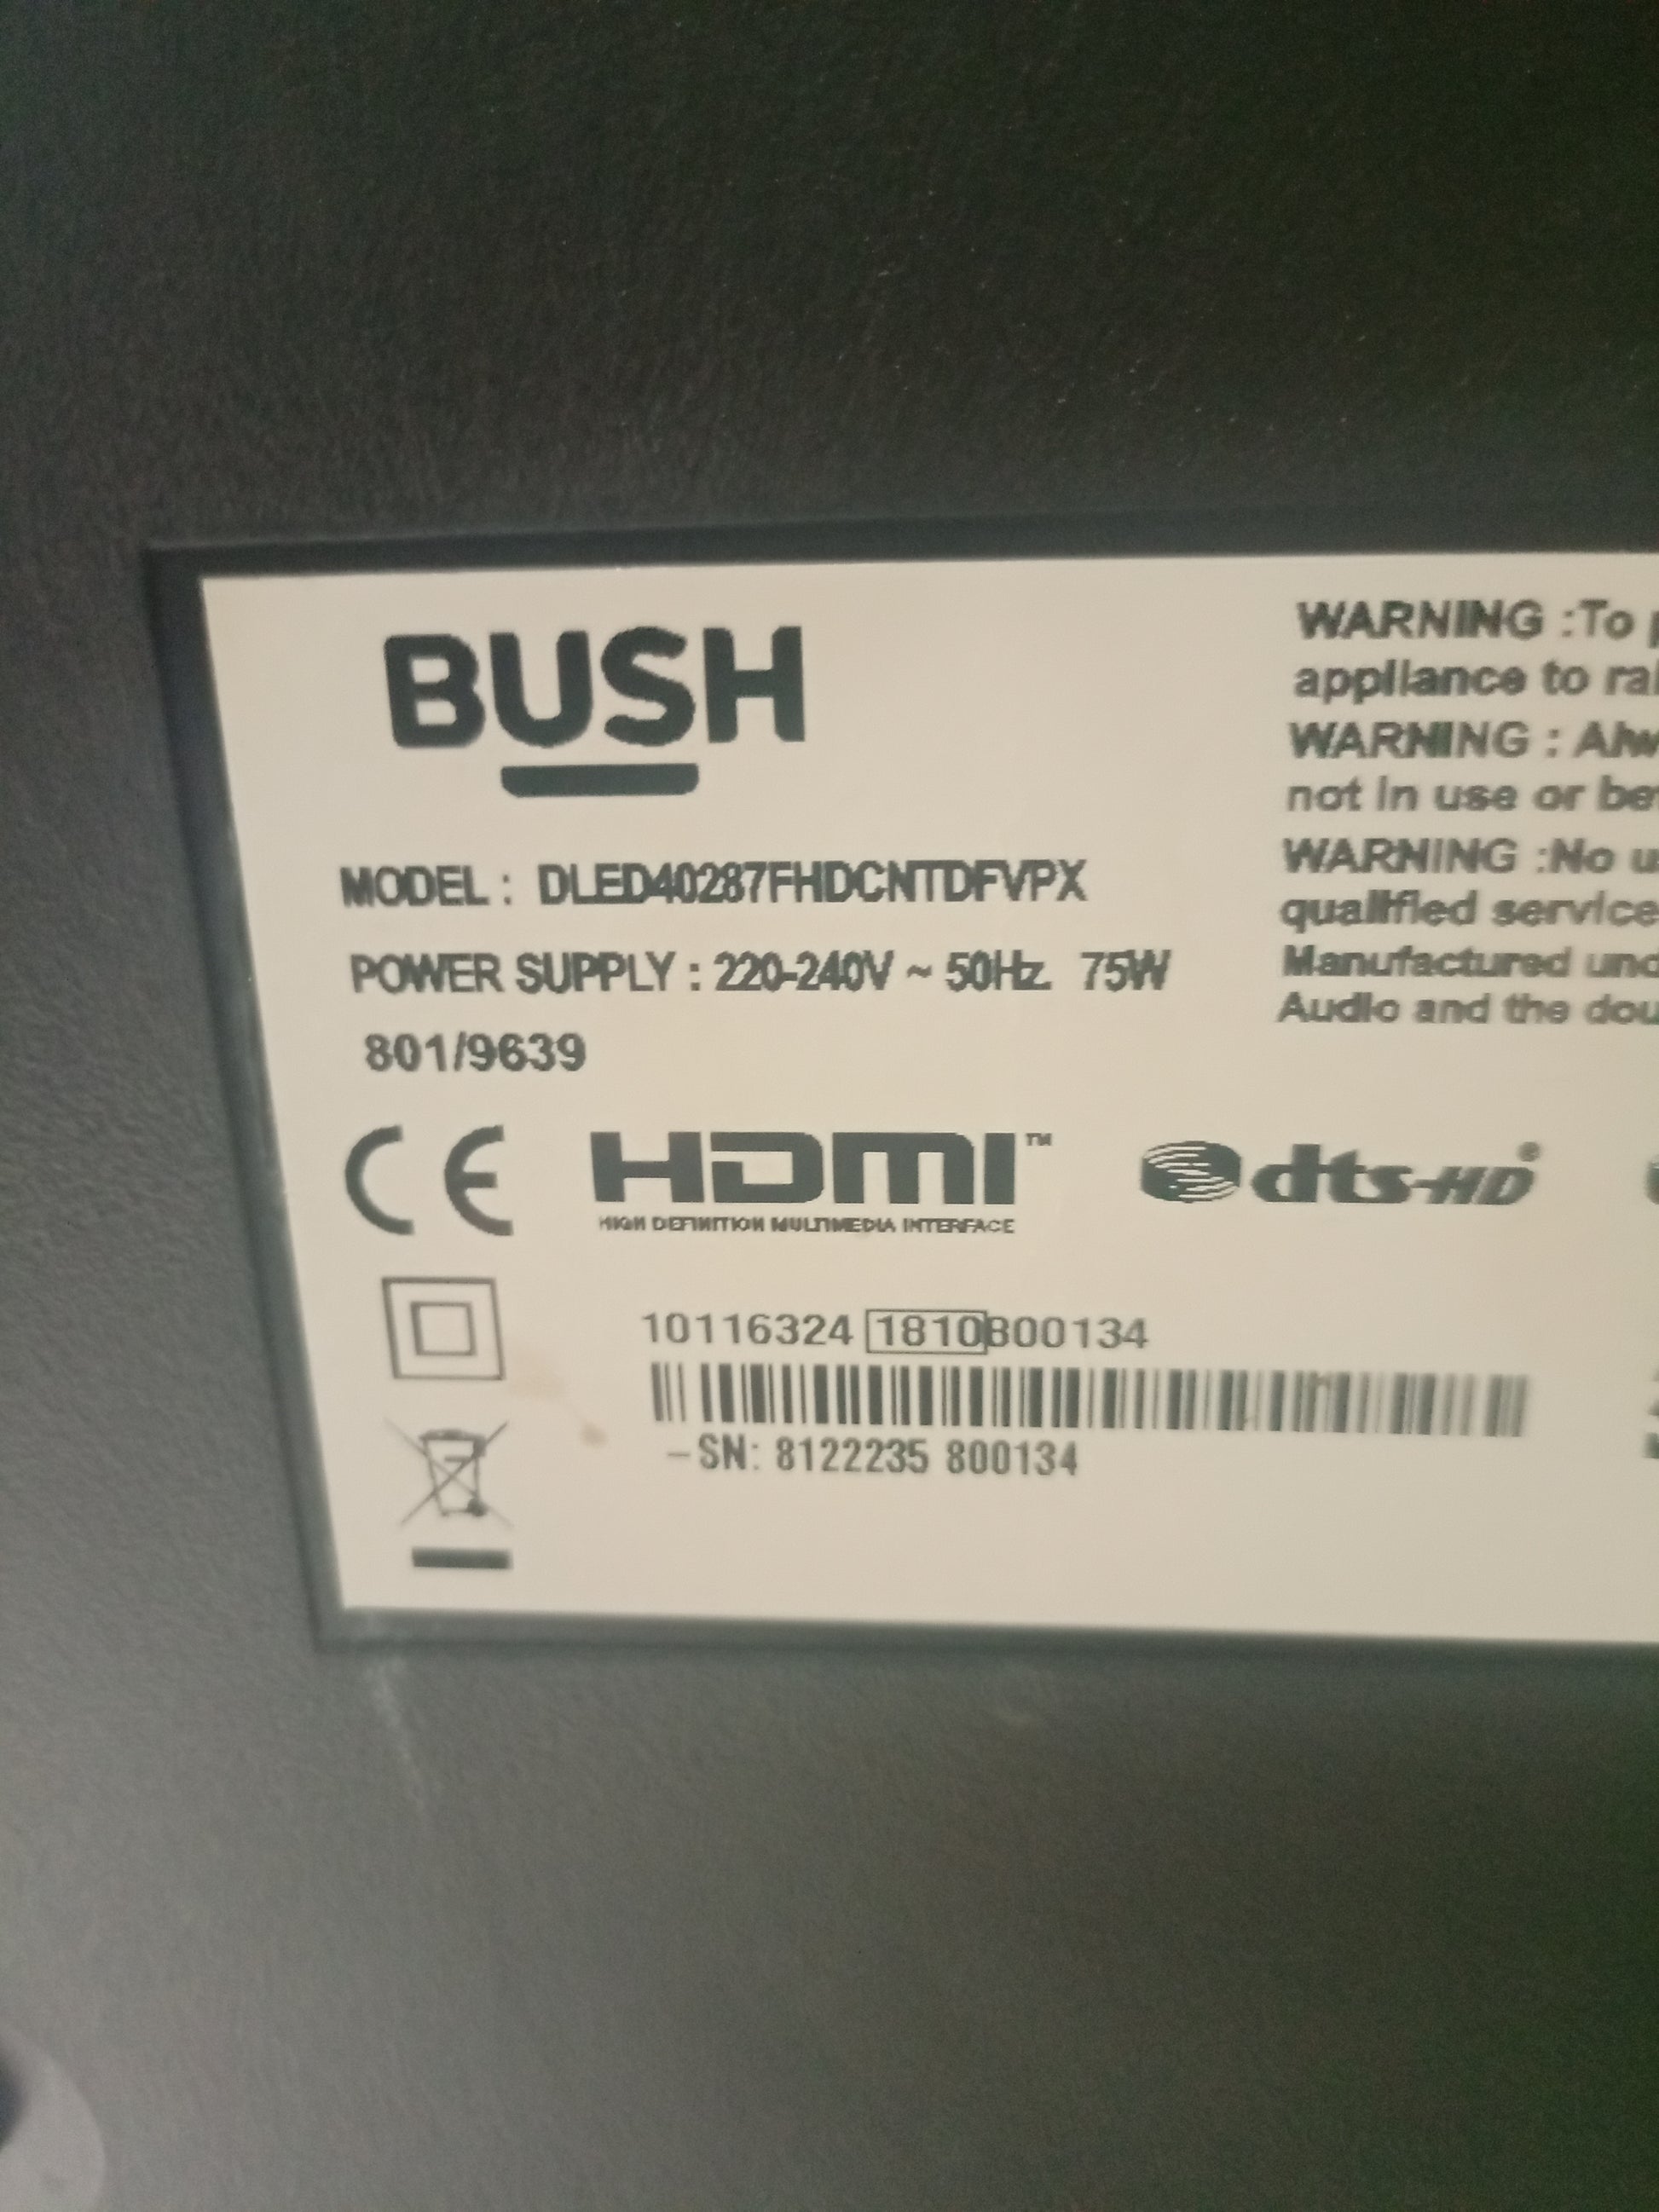 BUSH 40 Inch WiFi Smart Full HD LED TV + Netflix, YouTube & Miracast - Model number sticker